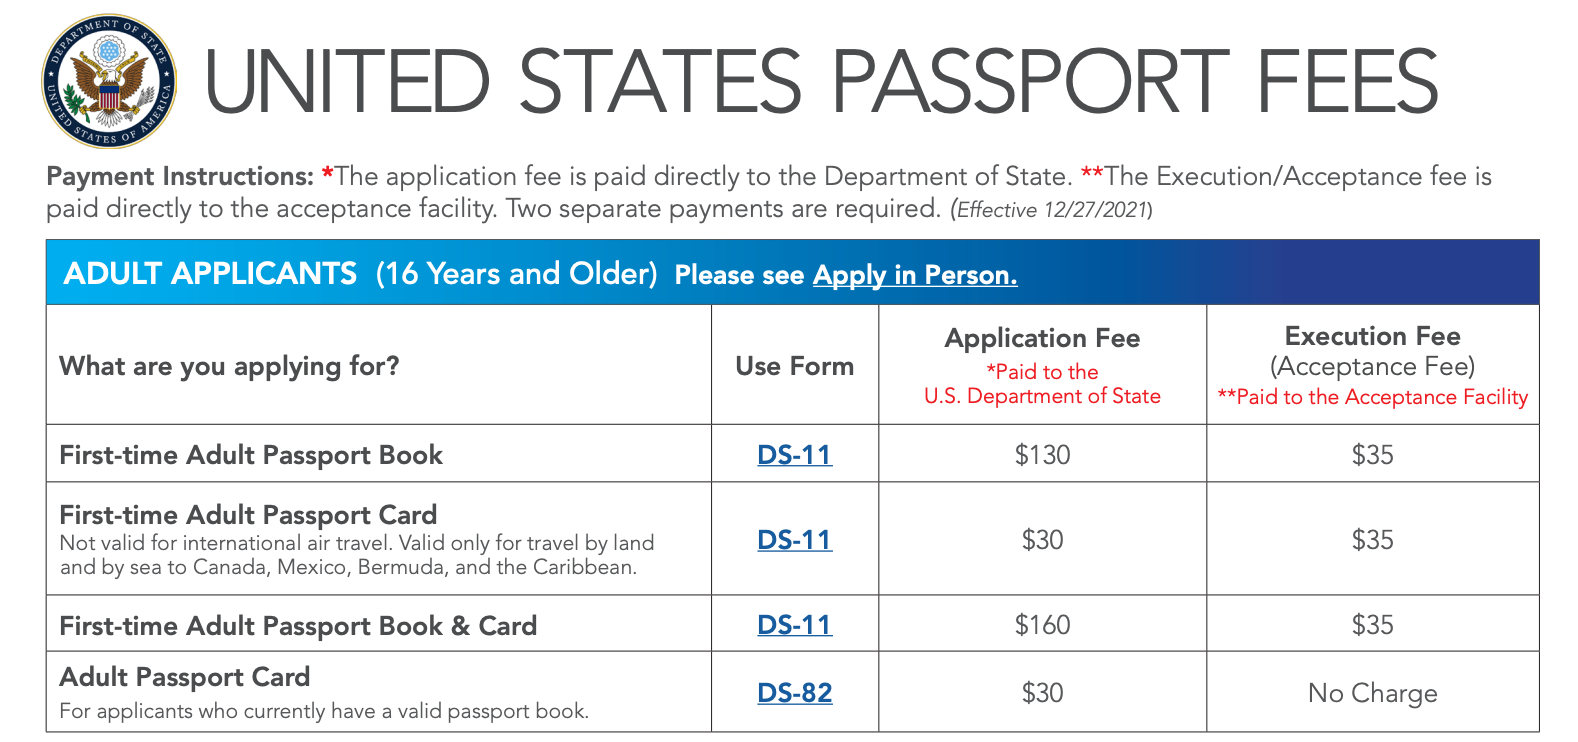 passport renewal travel restrictions